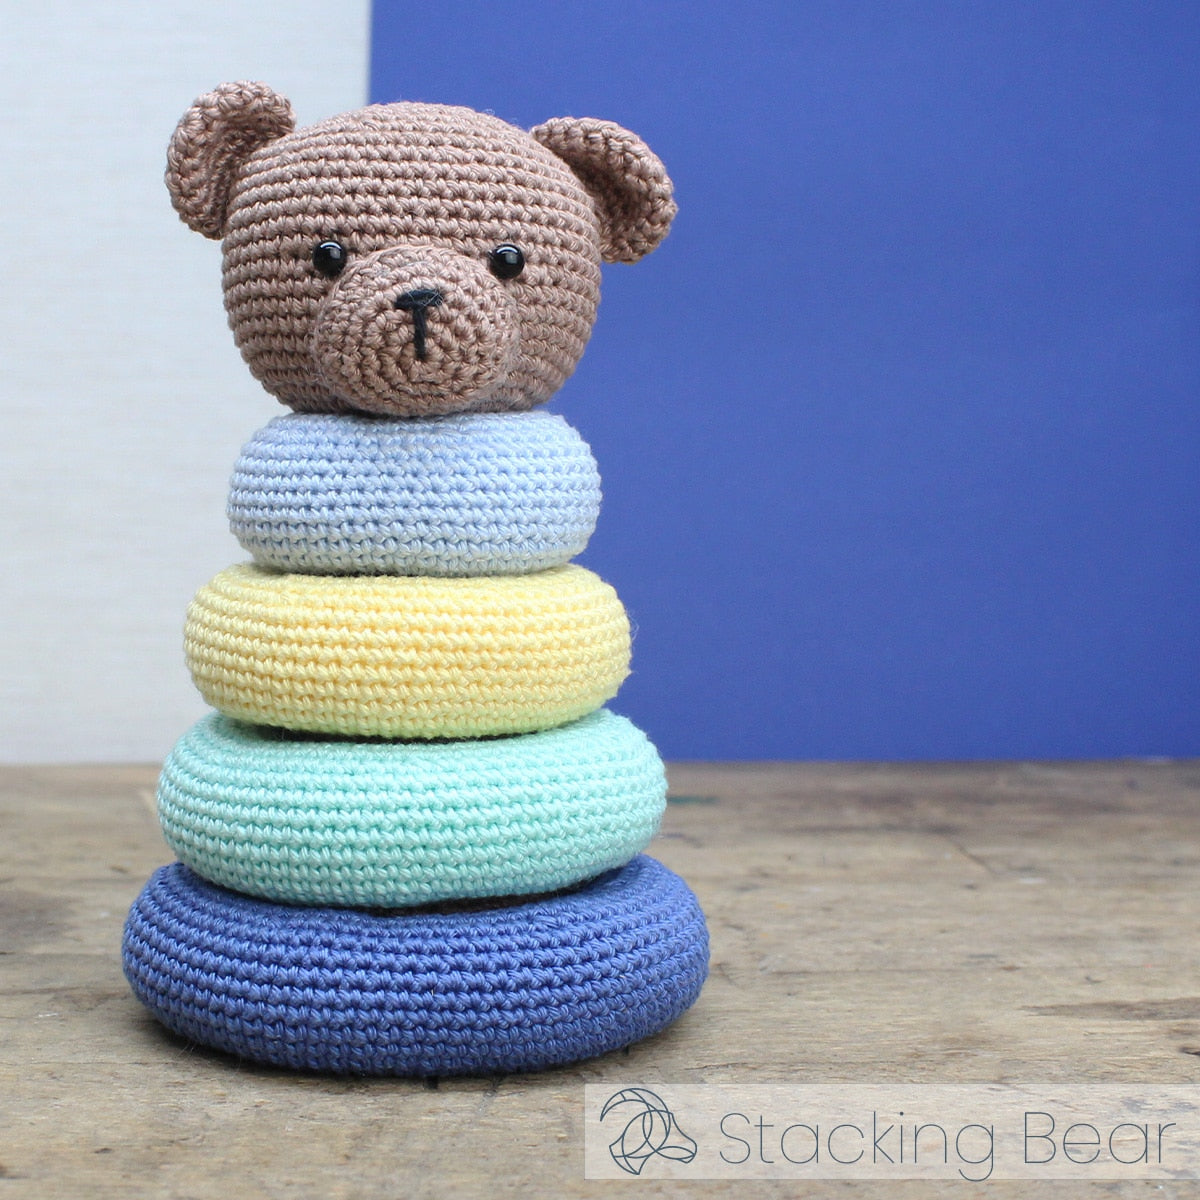 Stacking Bear Crochet DIY Kit